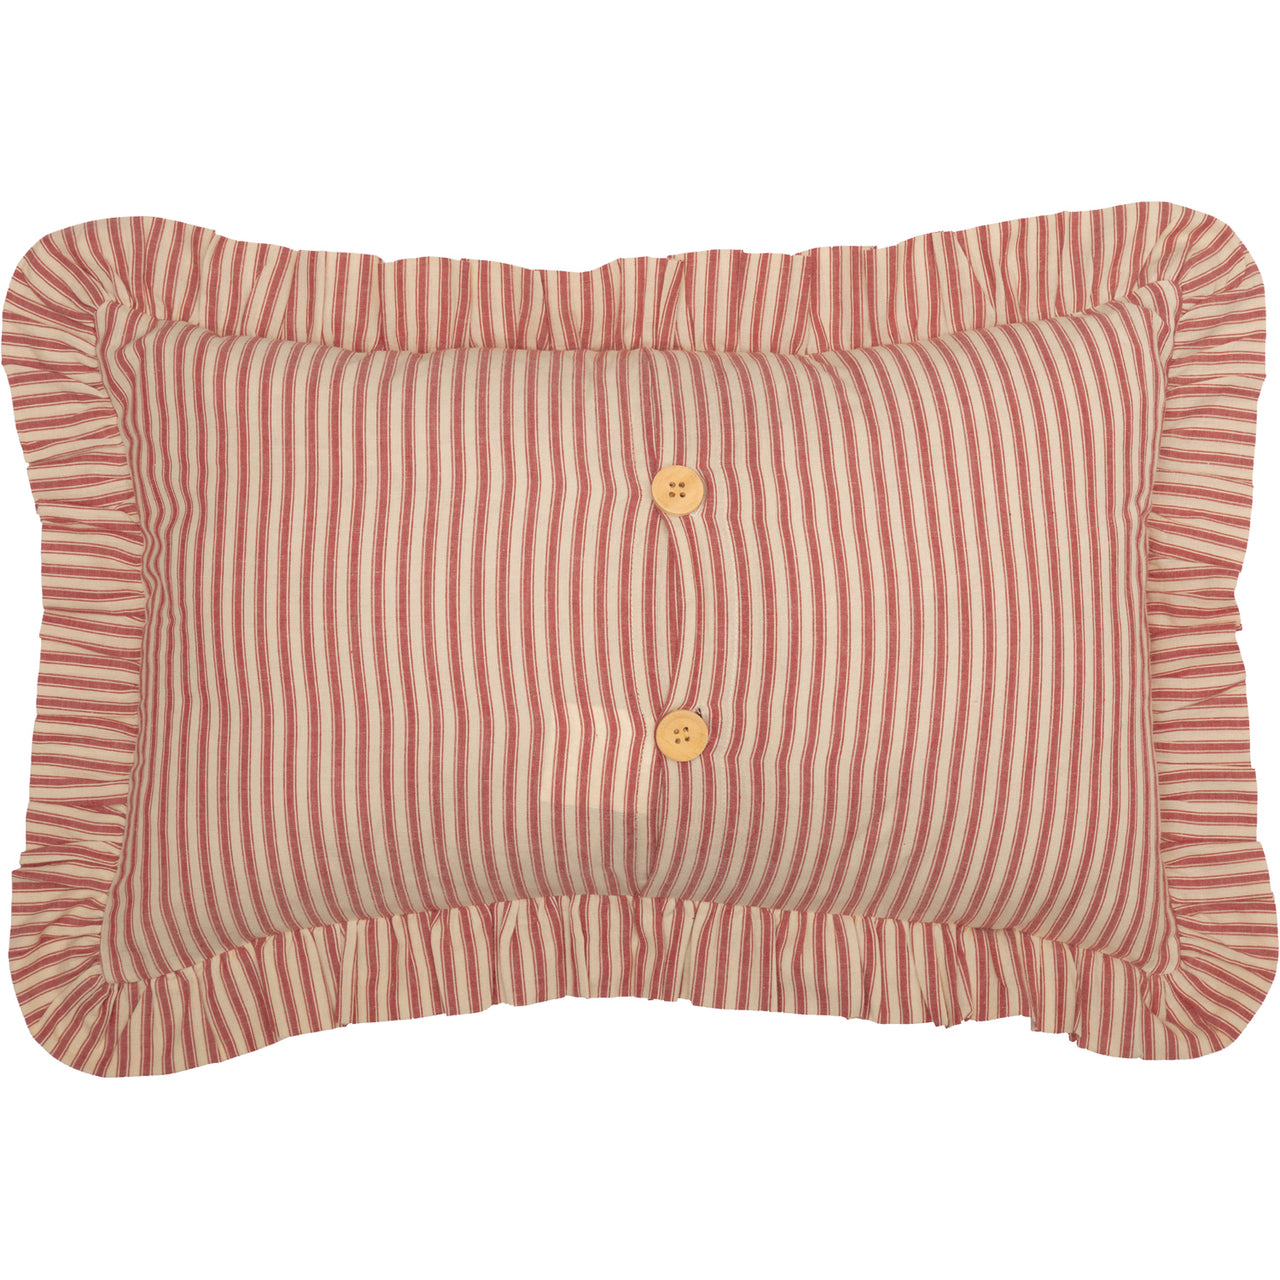 Sawyer Mill Red Ticking Stripe Fabric Pillow 14x22 VHC Brands